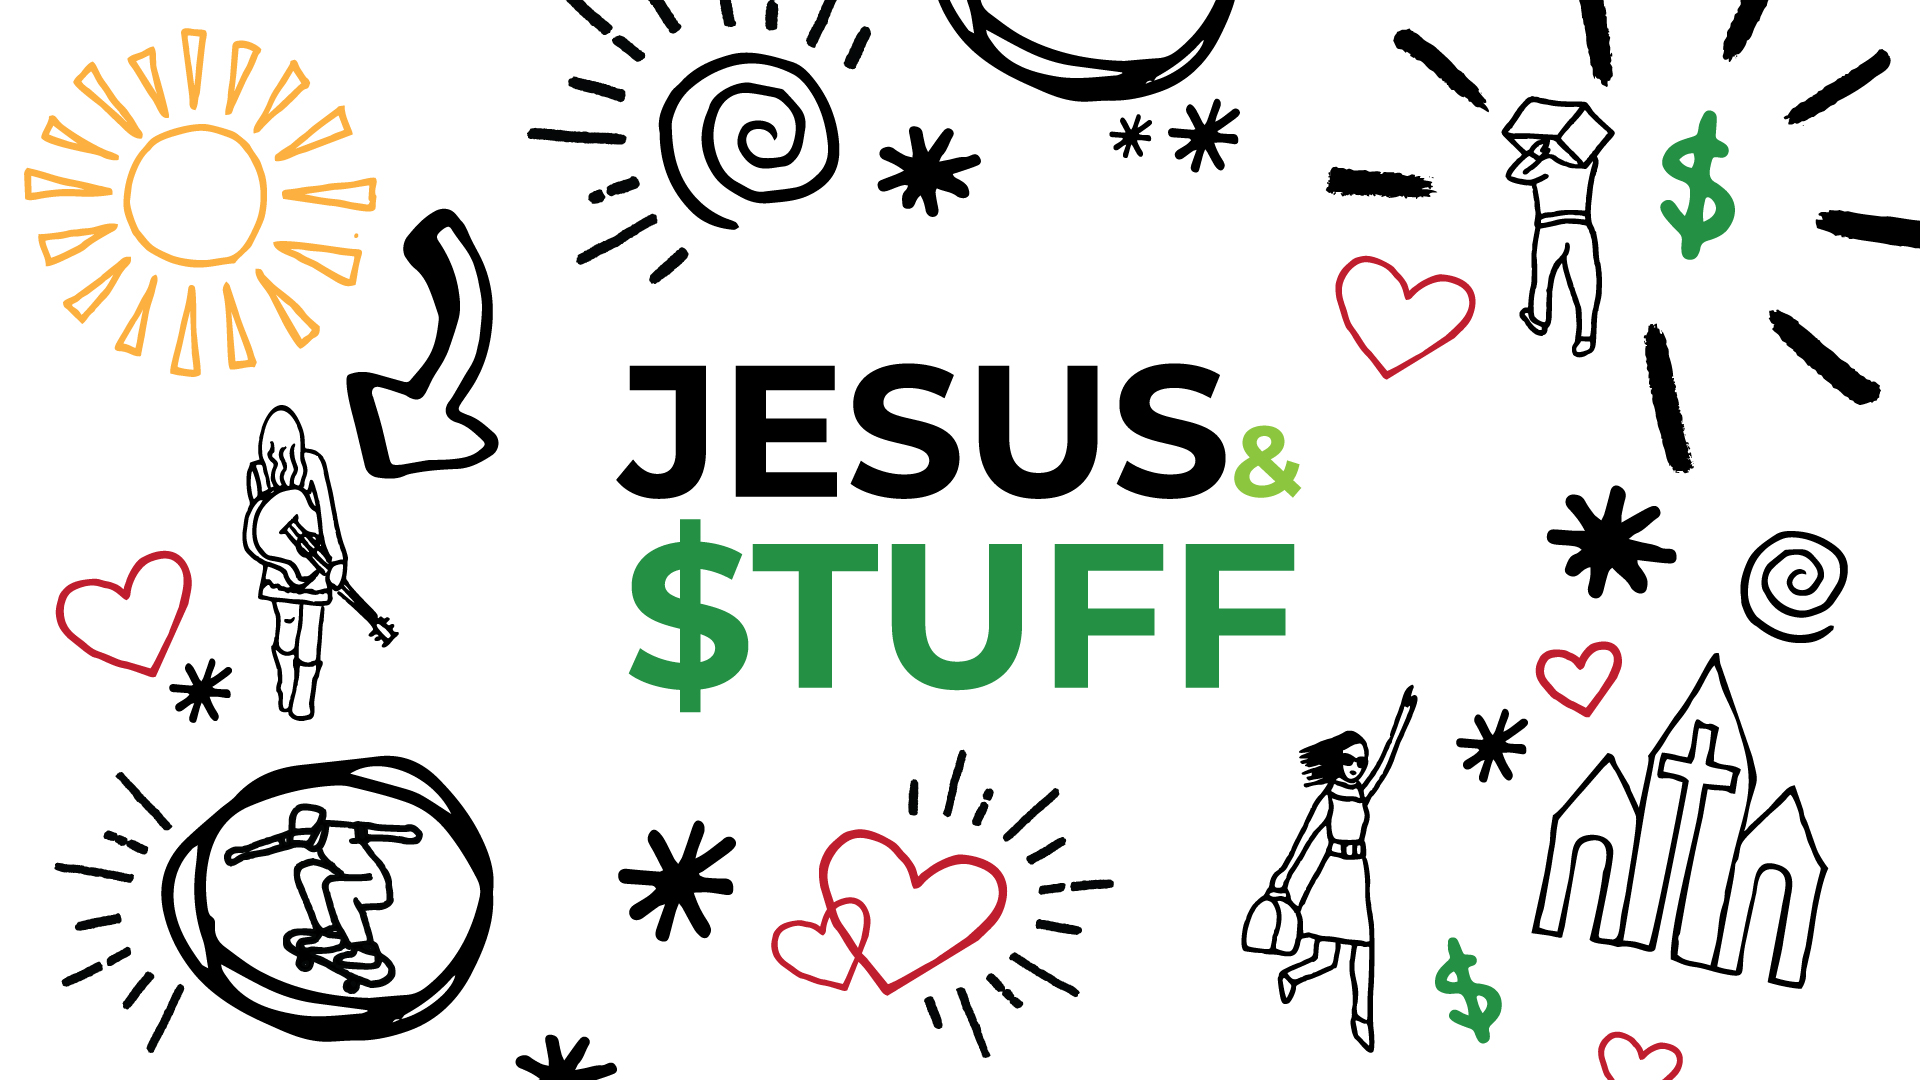 Jesus & $tuff - Part VI